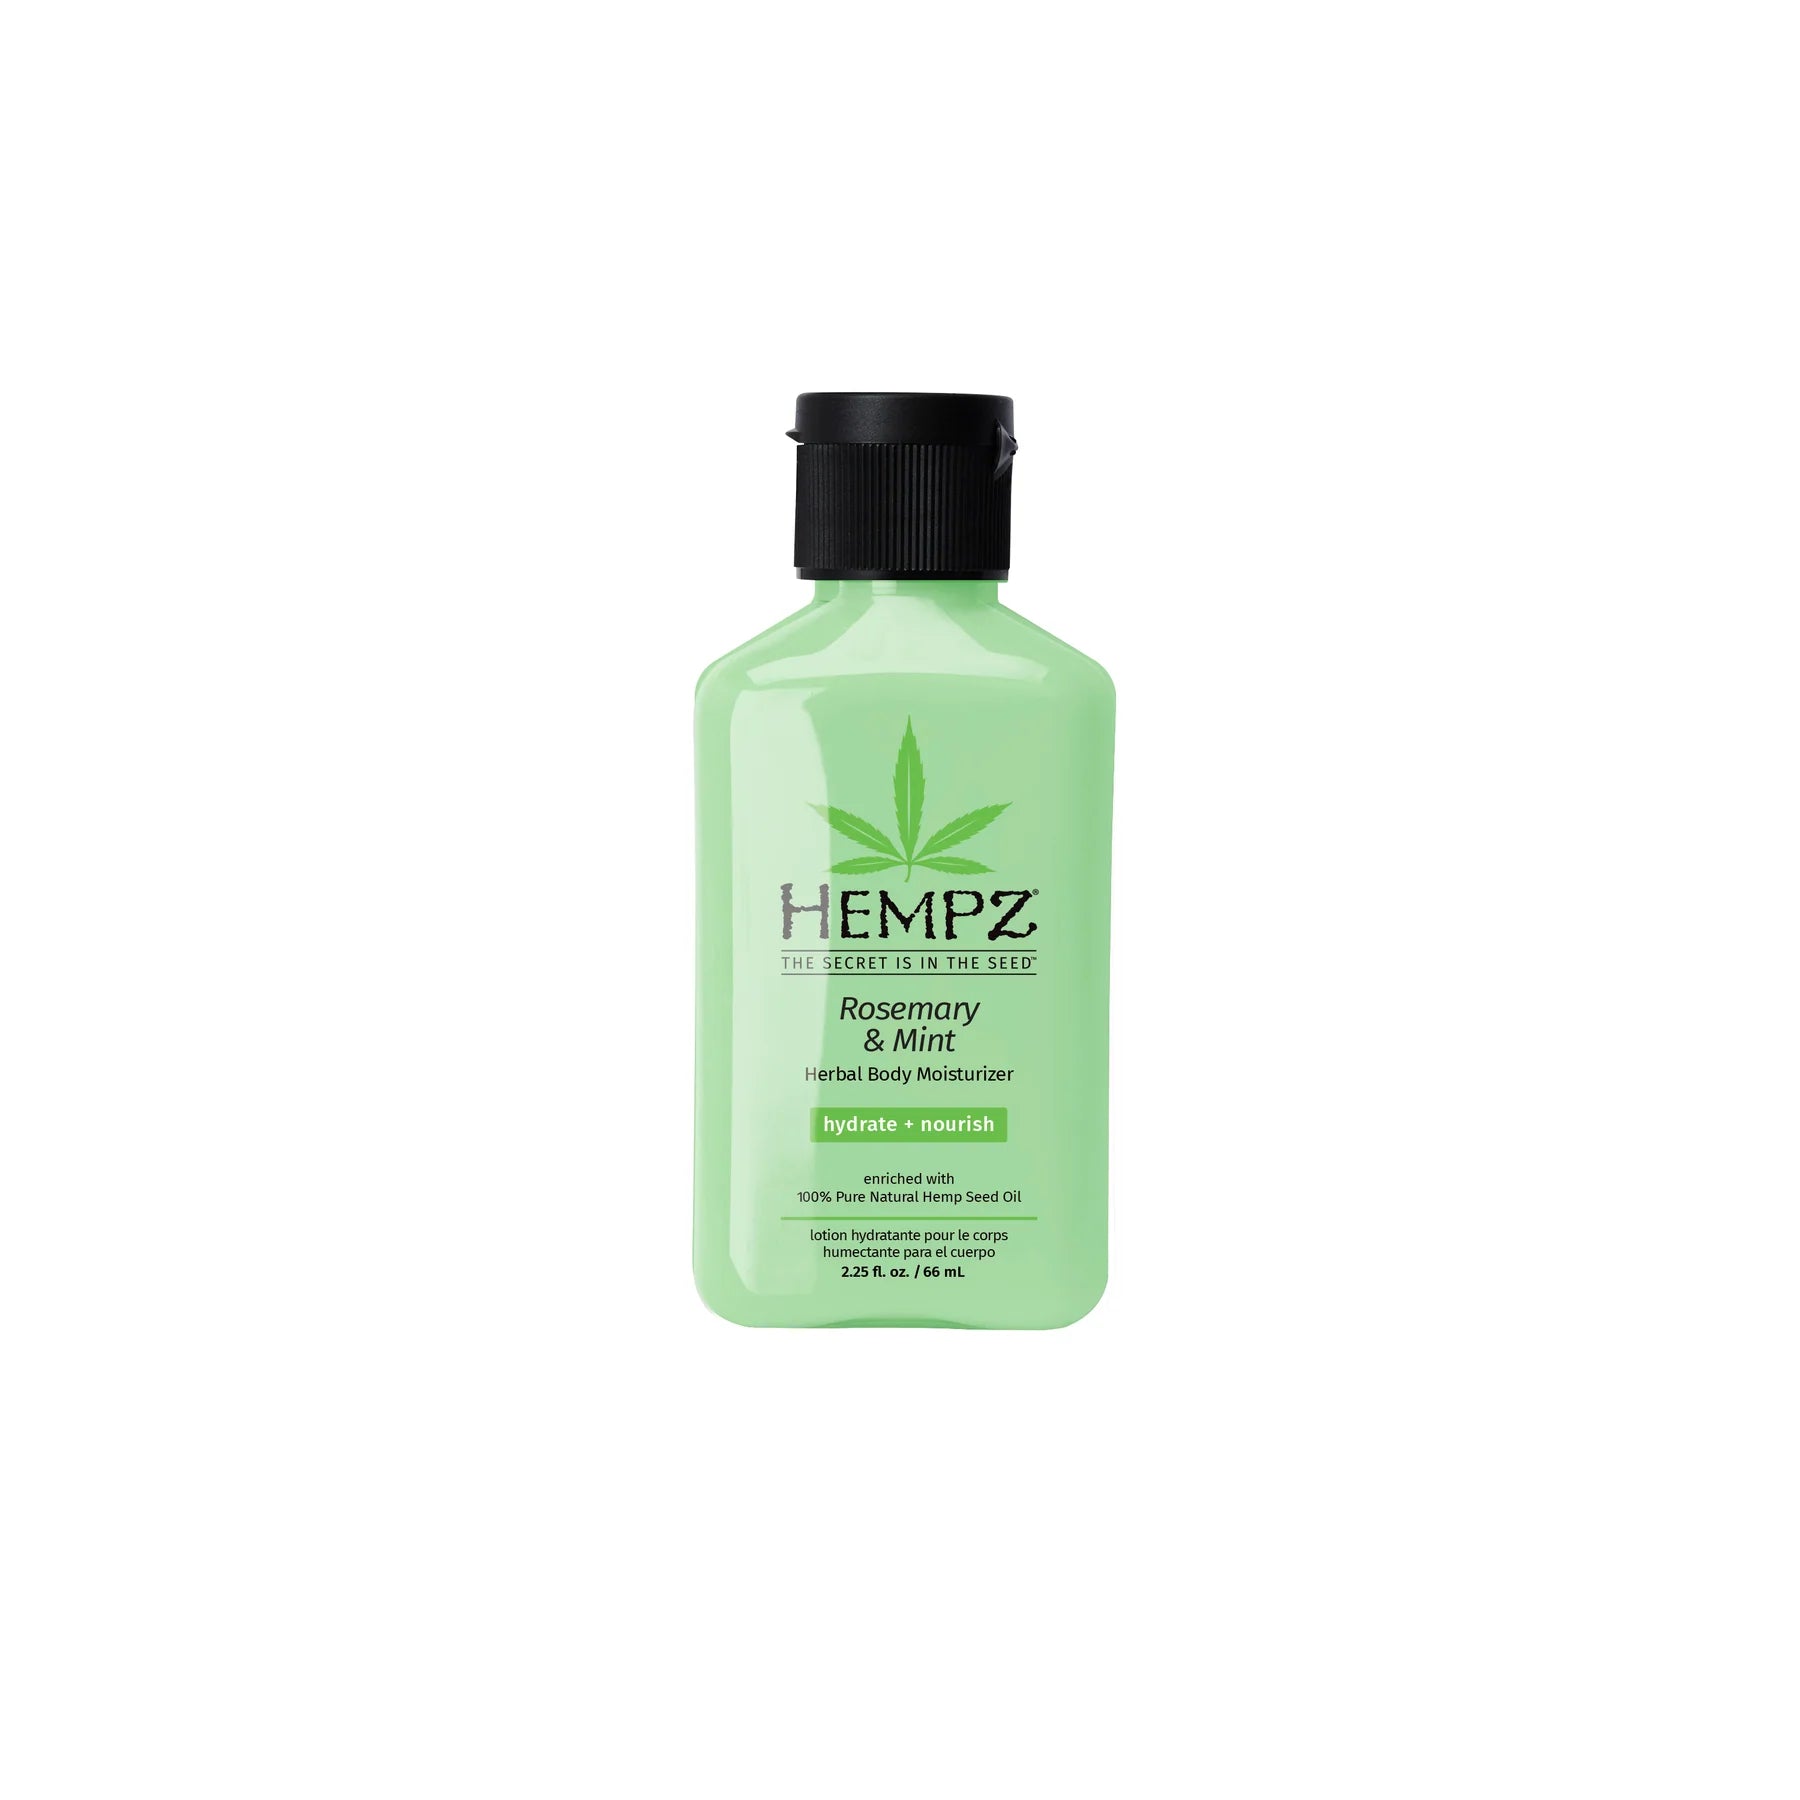 Hempz - Rosemary & Mint Herbal Body Moisturizer - Creata Beauty - Professional Beauty Products